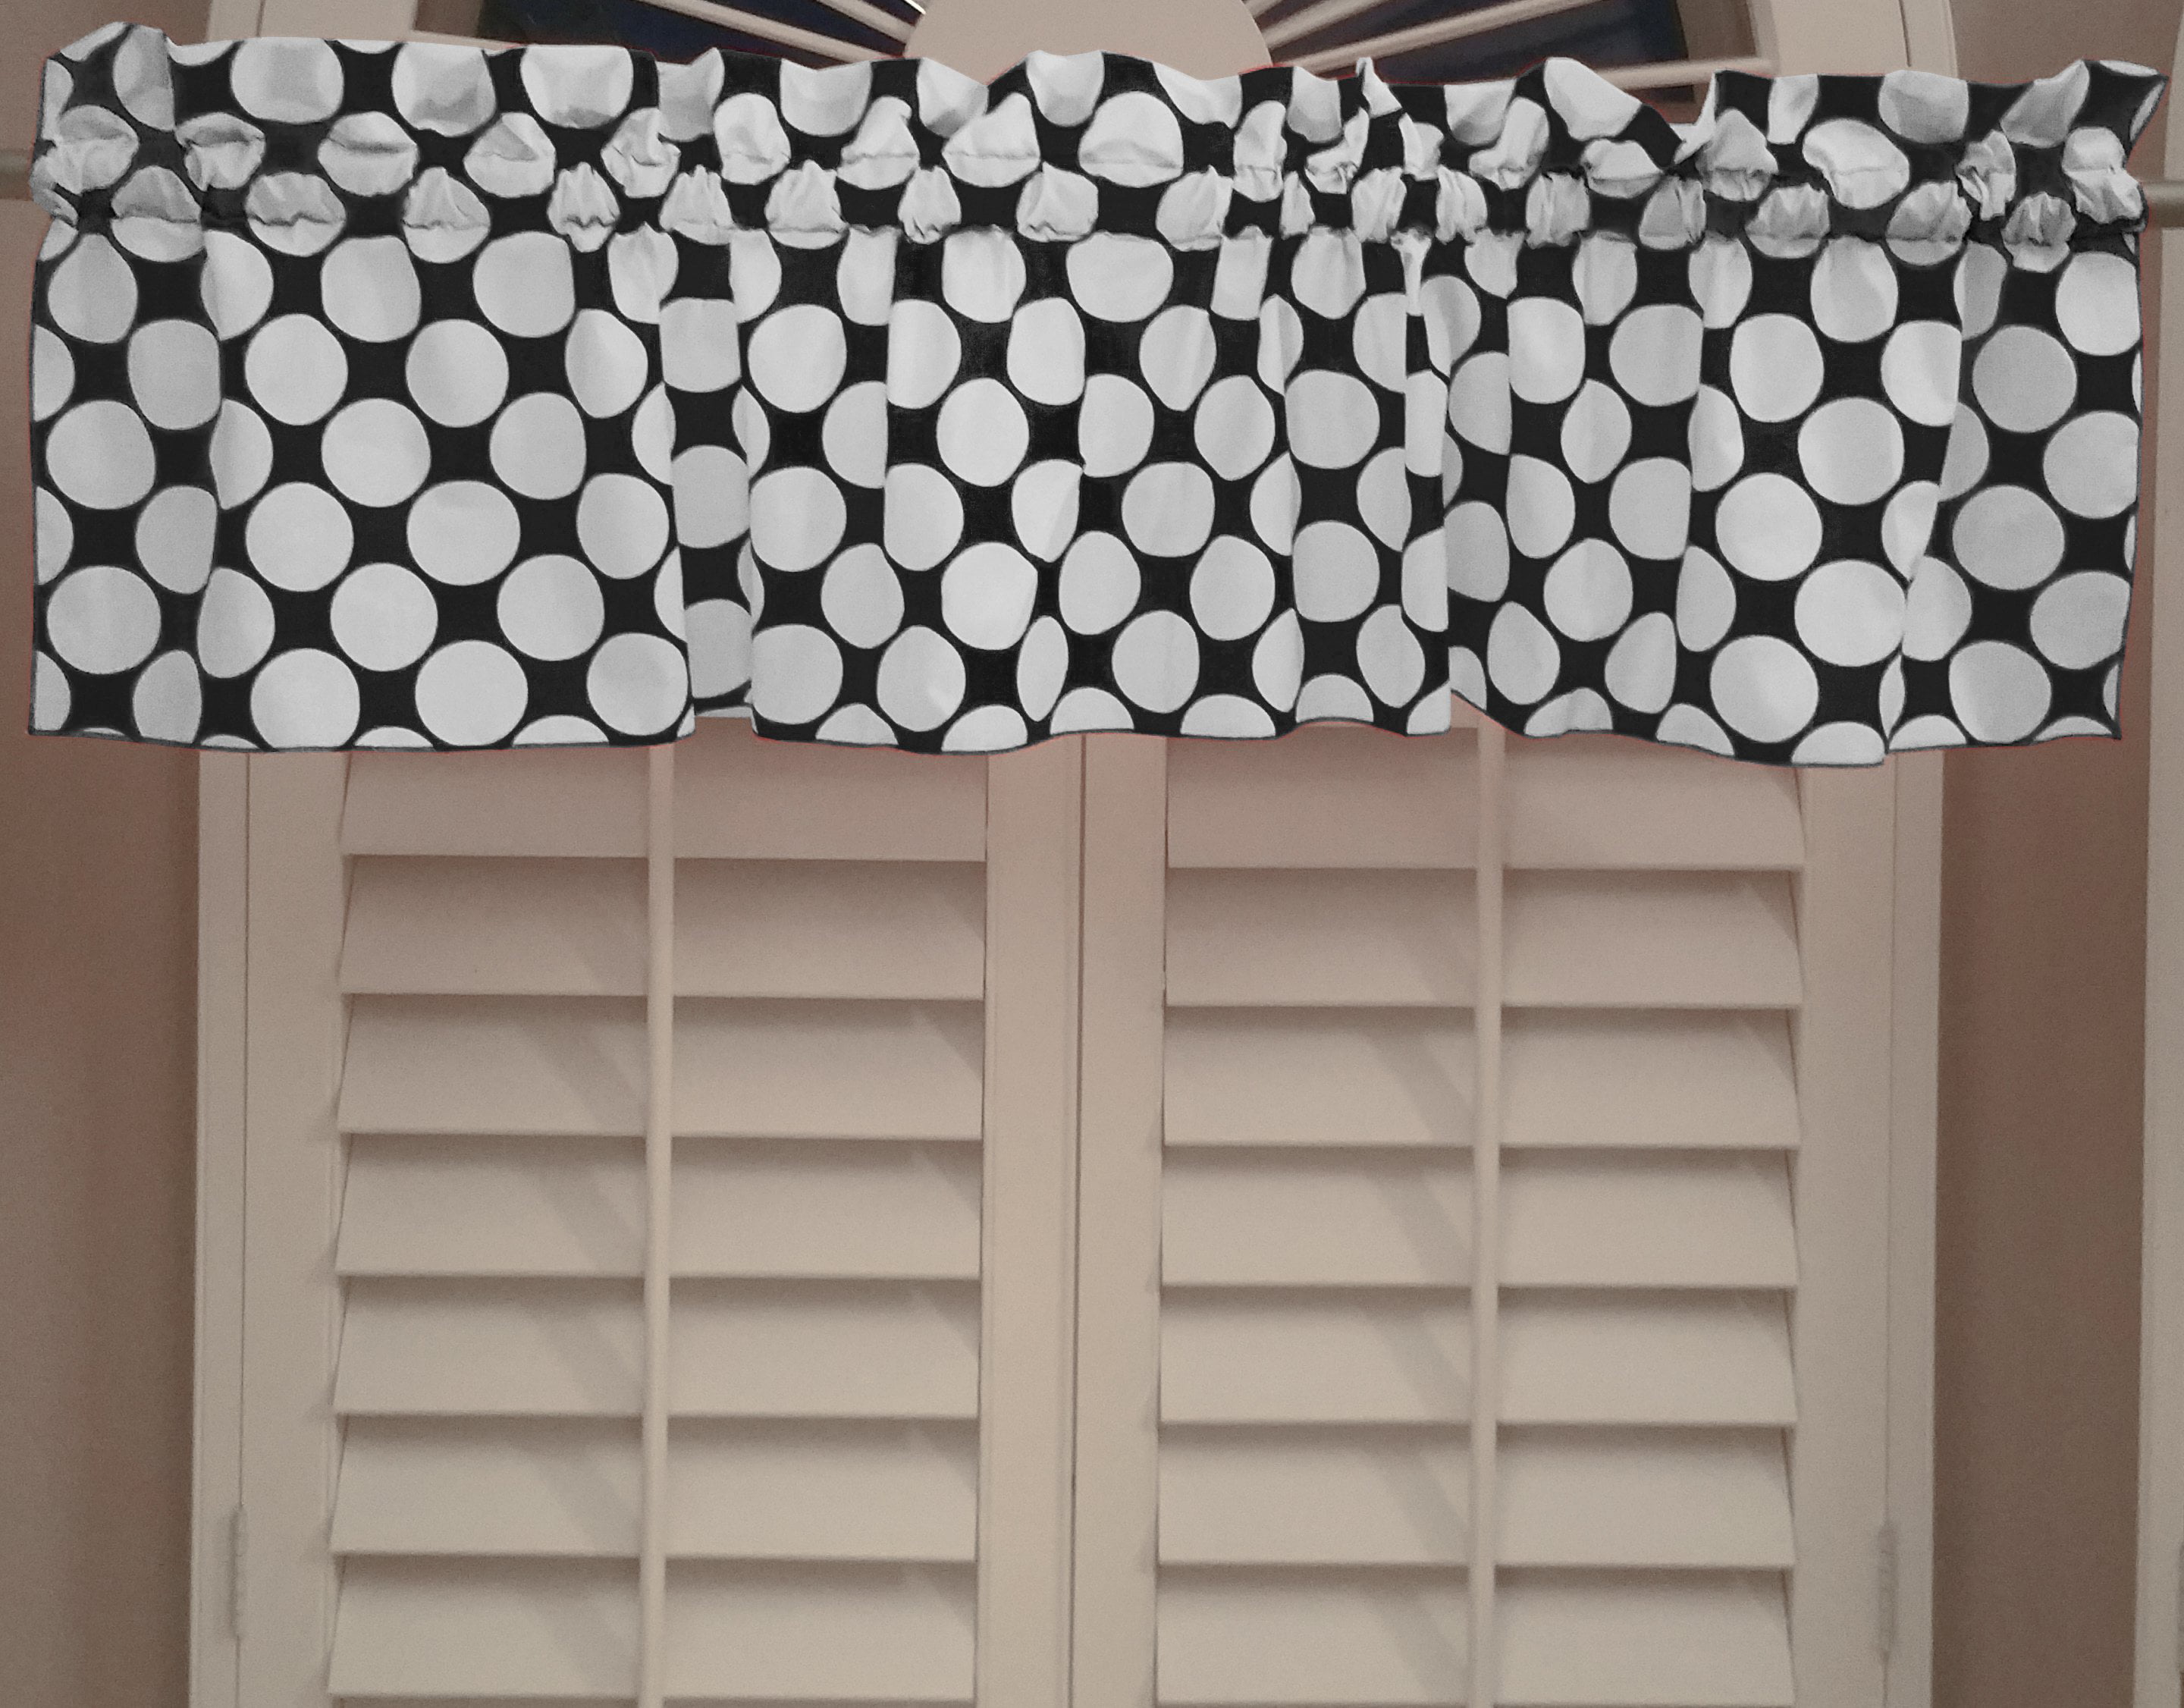 lovemyfabric White Polka Dots/Spots on Red Print 3-Piece Curtain/Valance Set 